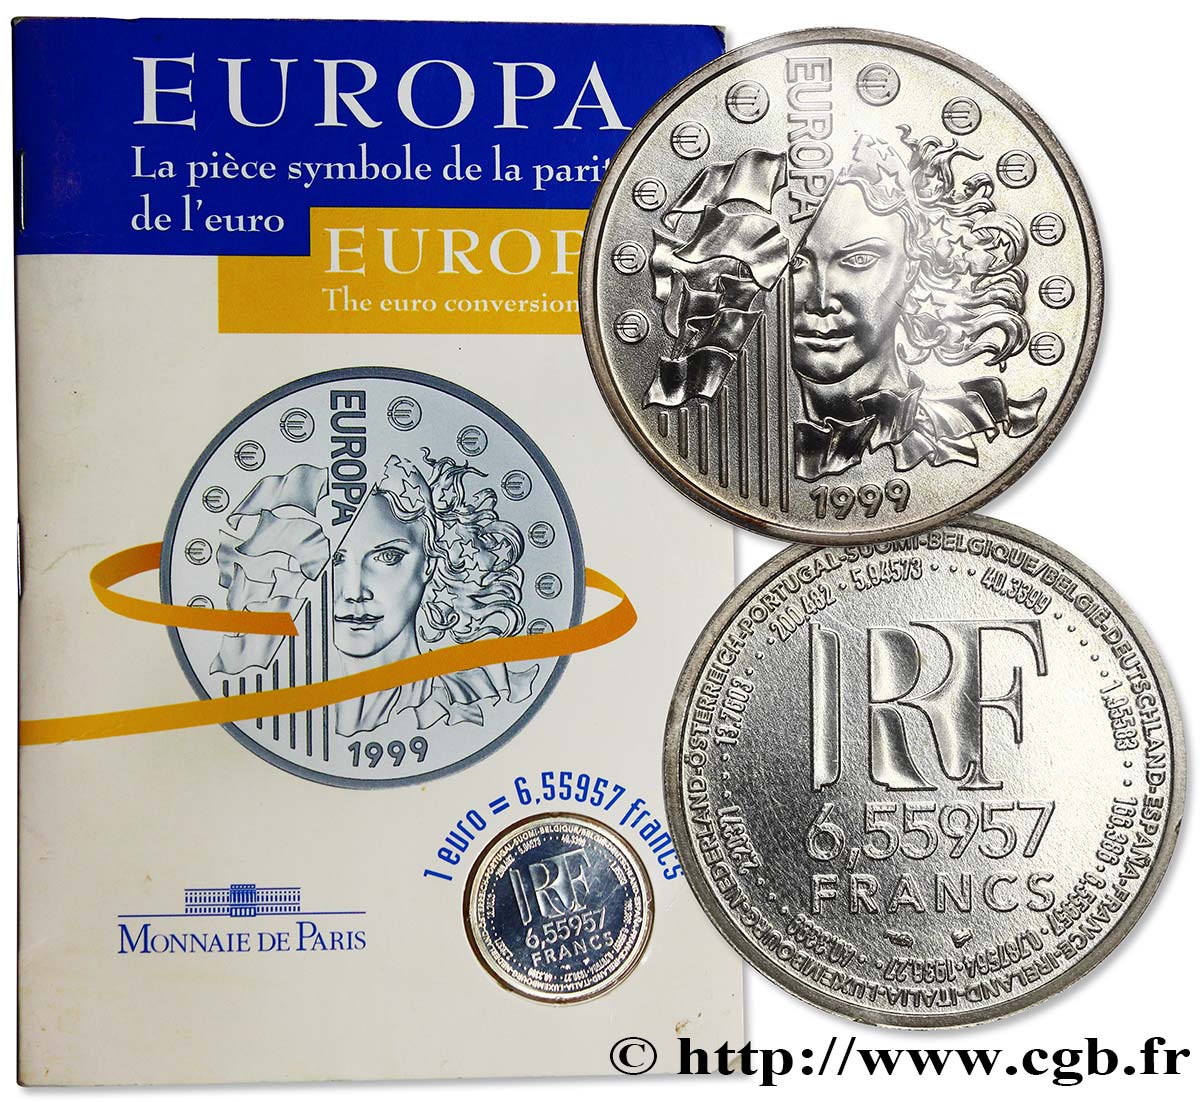 Brillant Universel 6,55957 francs - La parité 1999  F.1250 2 MS68 